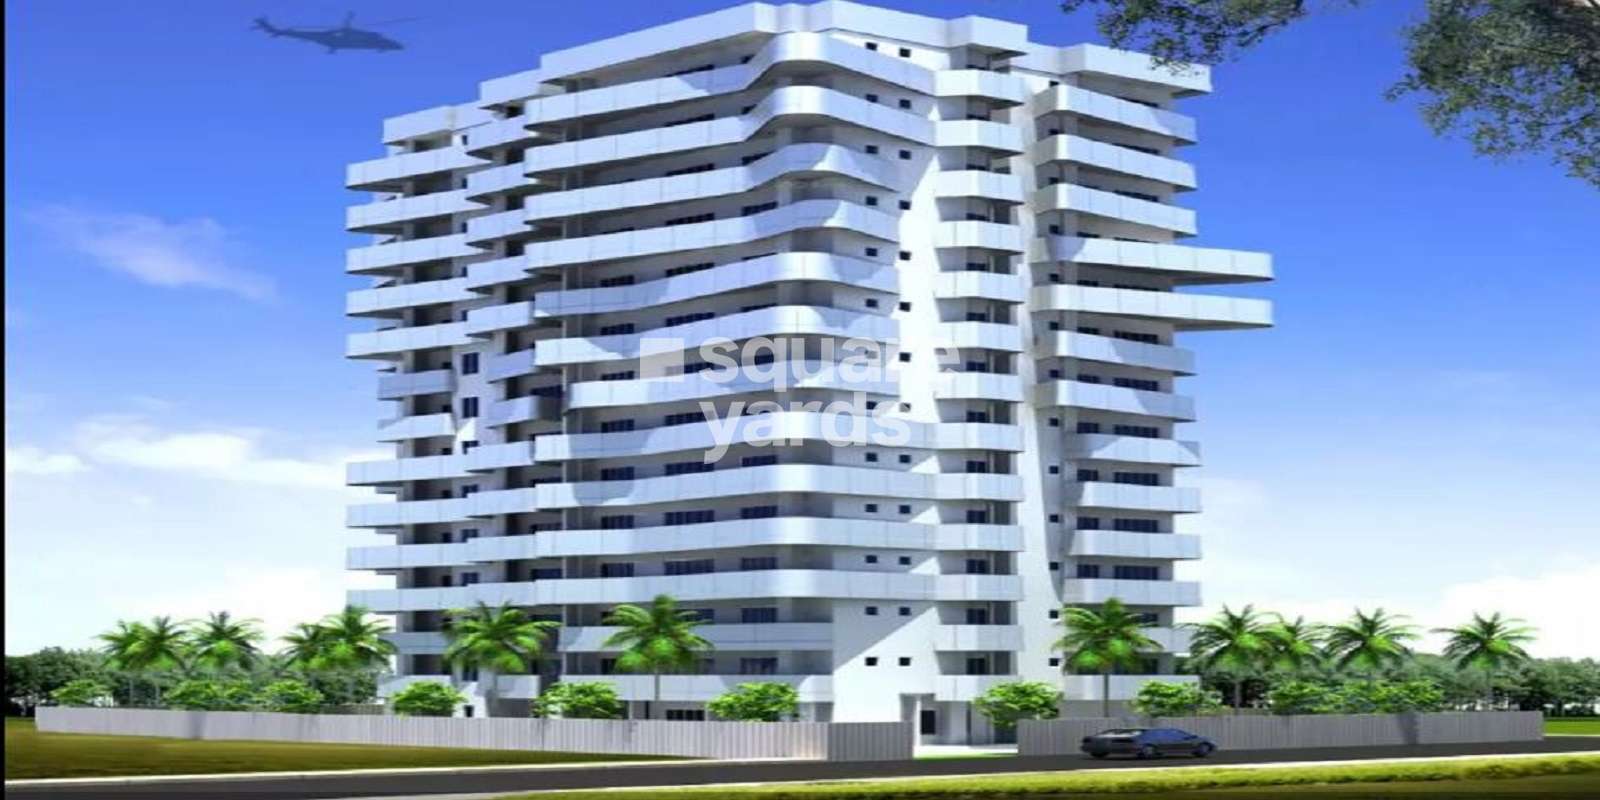 Chourasia Sapphire Apartment Cover Image